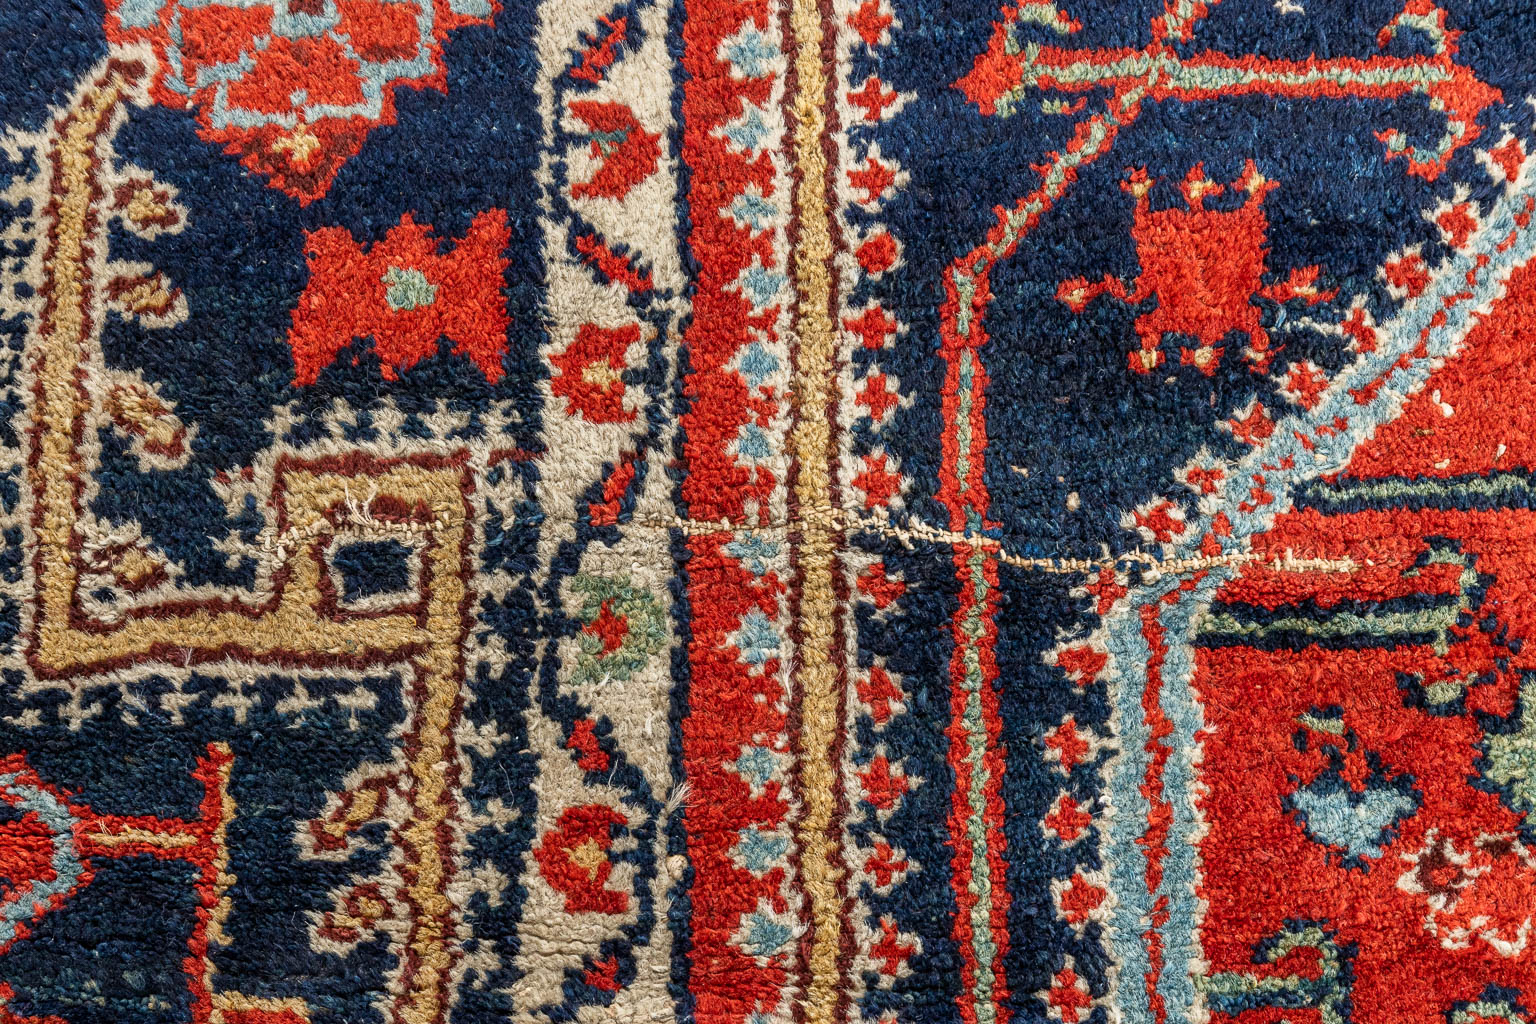 An Oriental hand-made carpet, Jozan Sarouk (D:190 x W:127 cm)